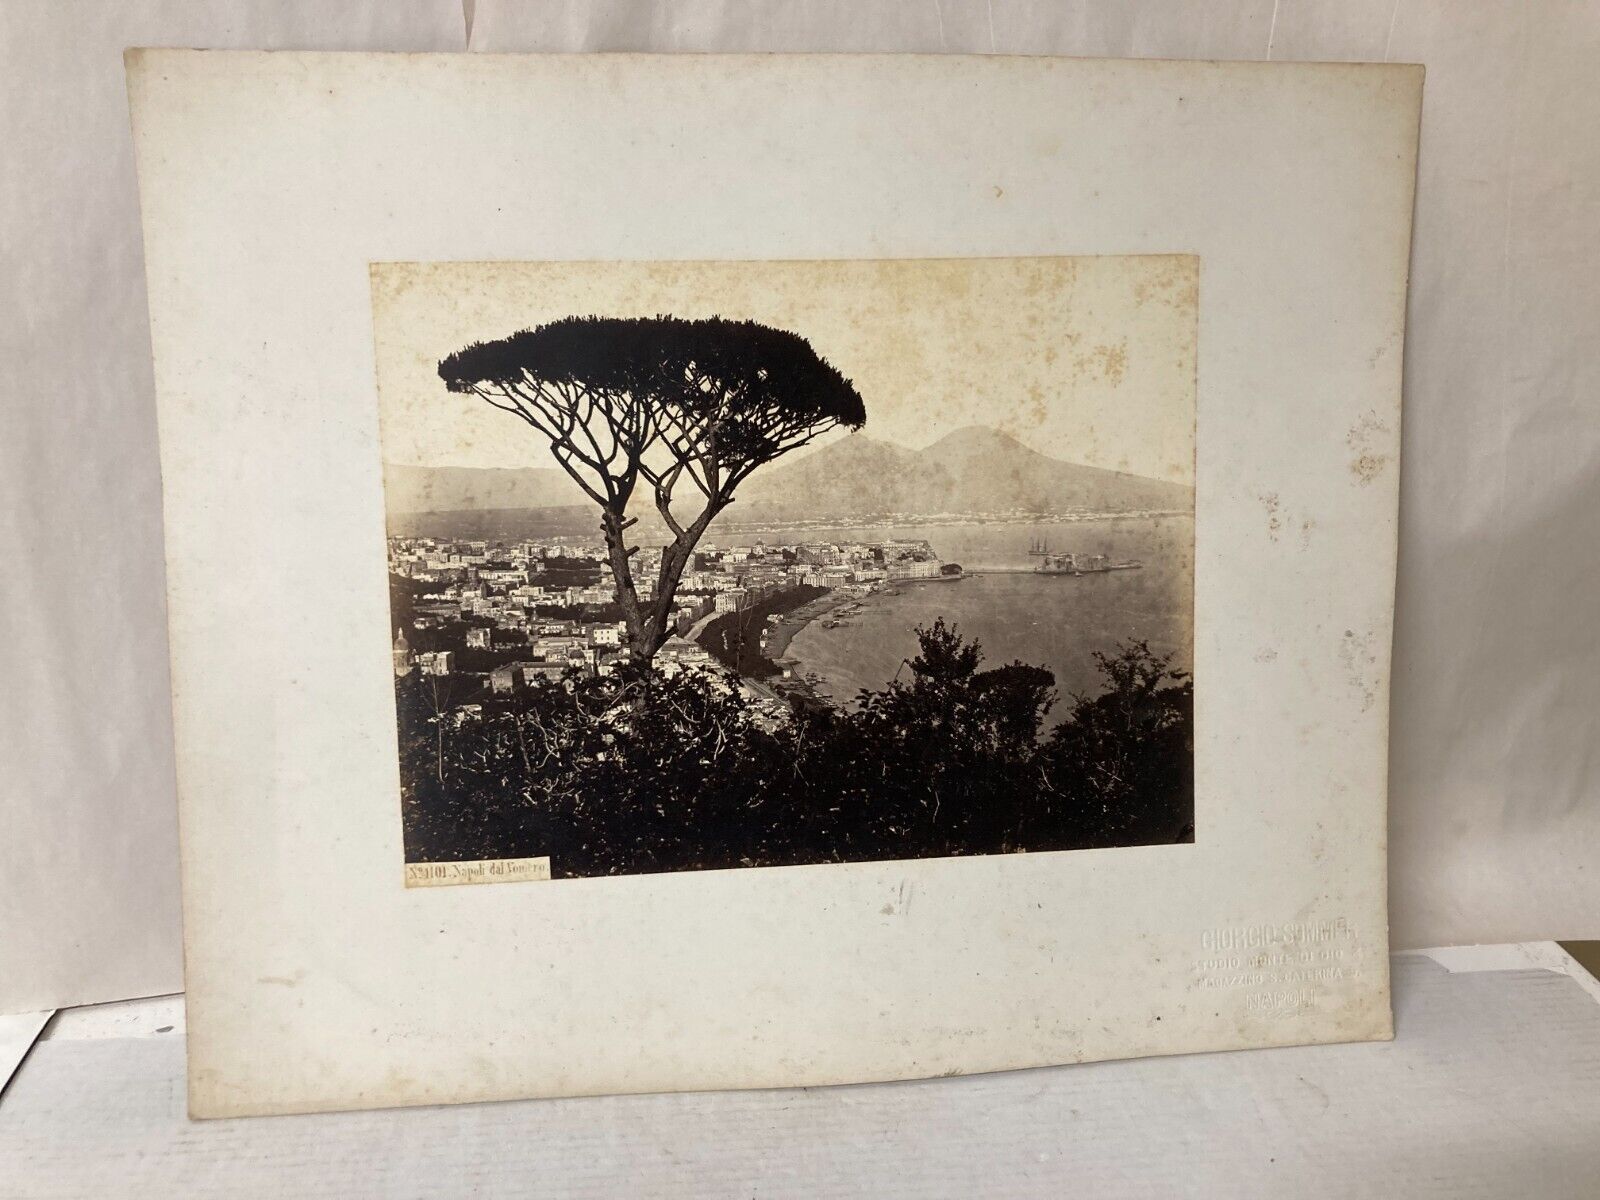 A Rare Collection of 4 Archaeological photographs by Giorgio Sommer circa 1870’s